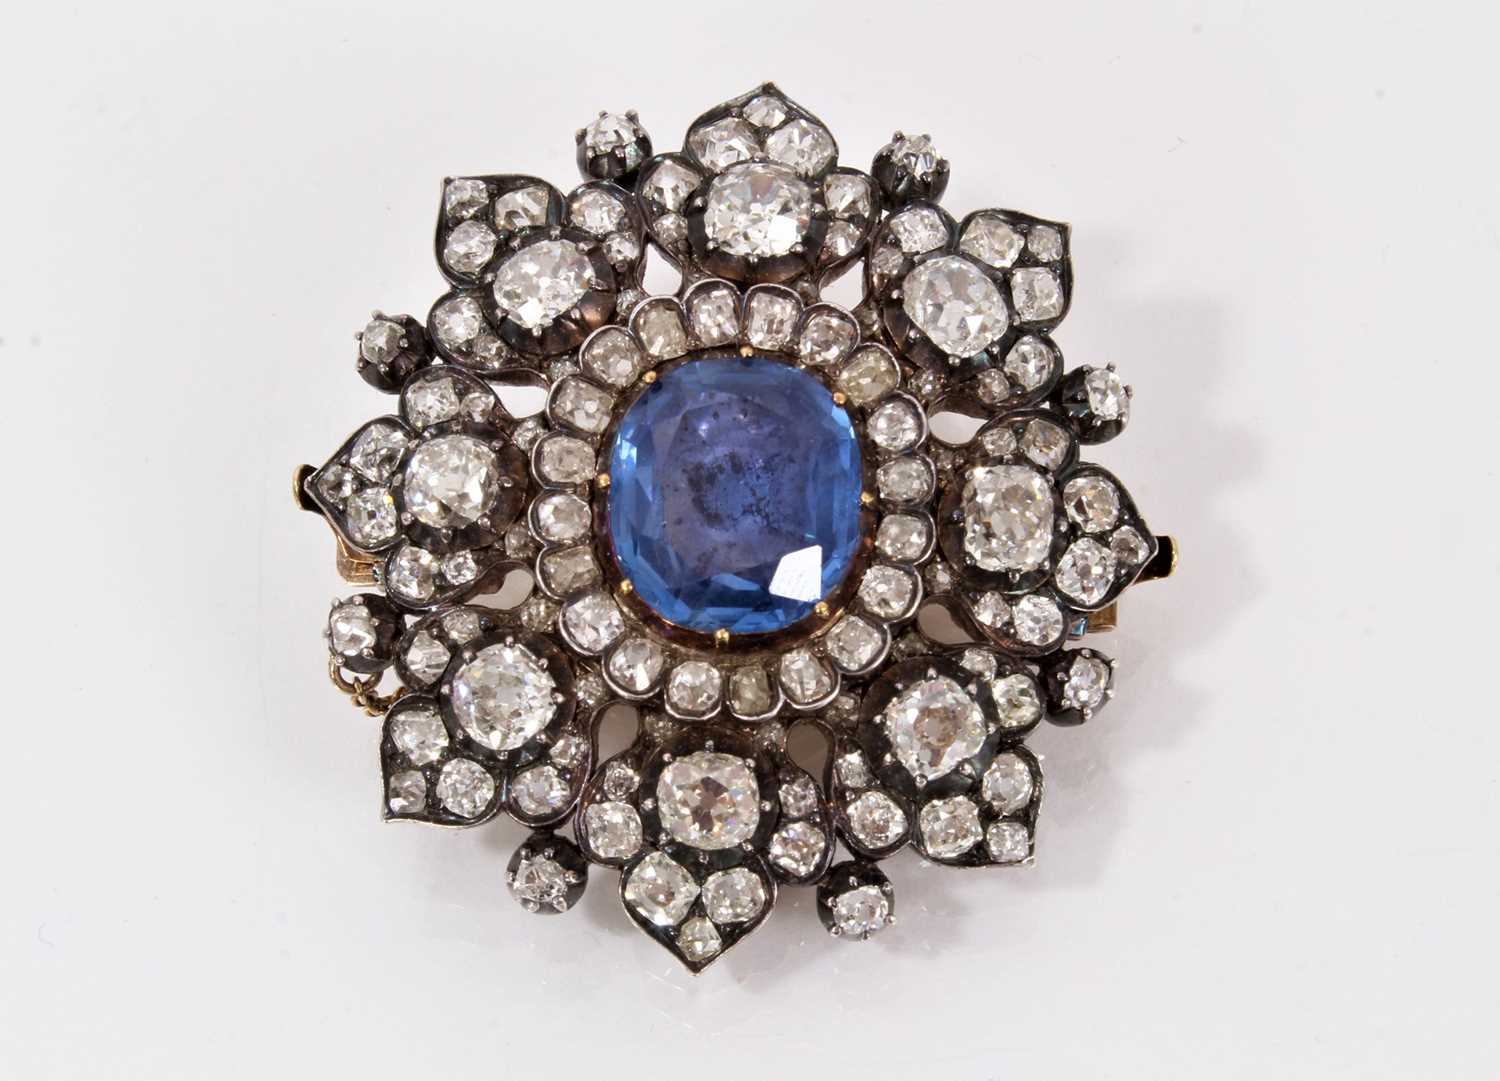 Lot 625 - Fine 19th century diamond and sapphire brooch